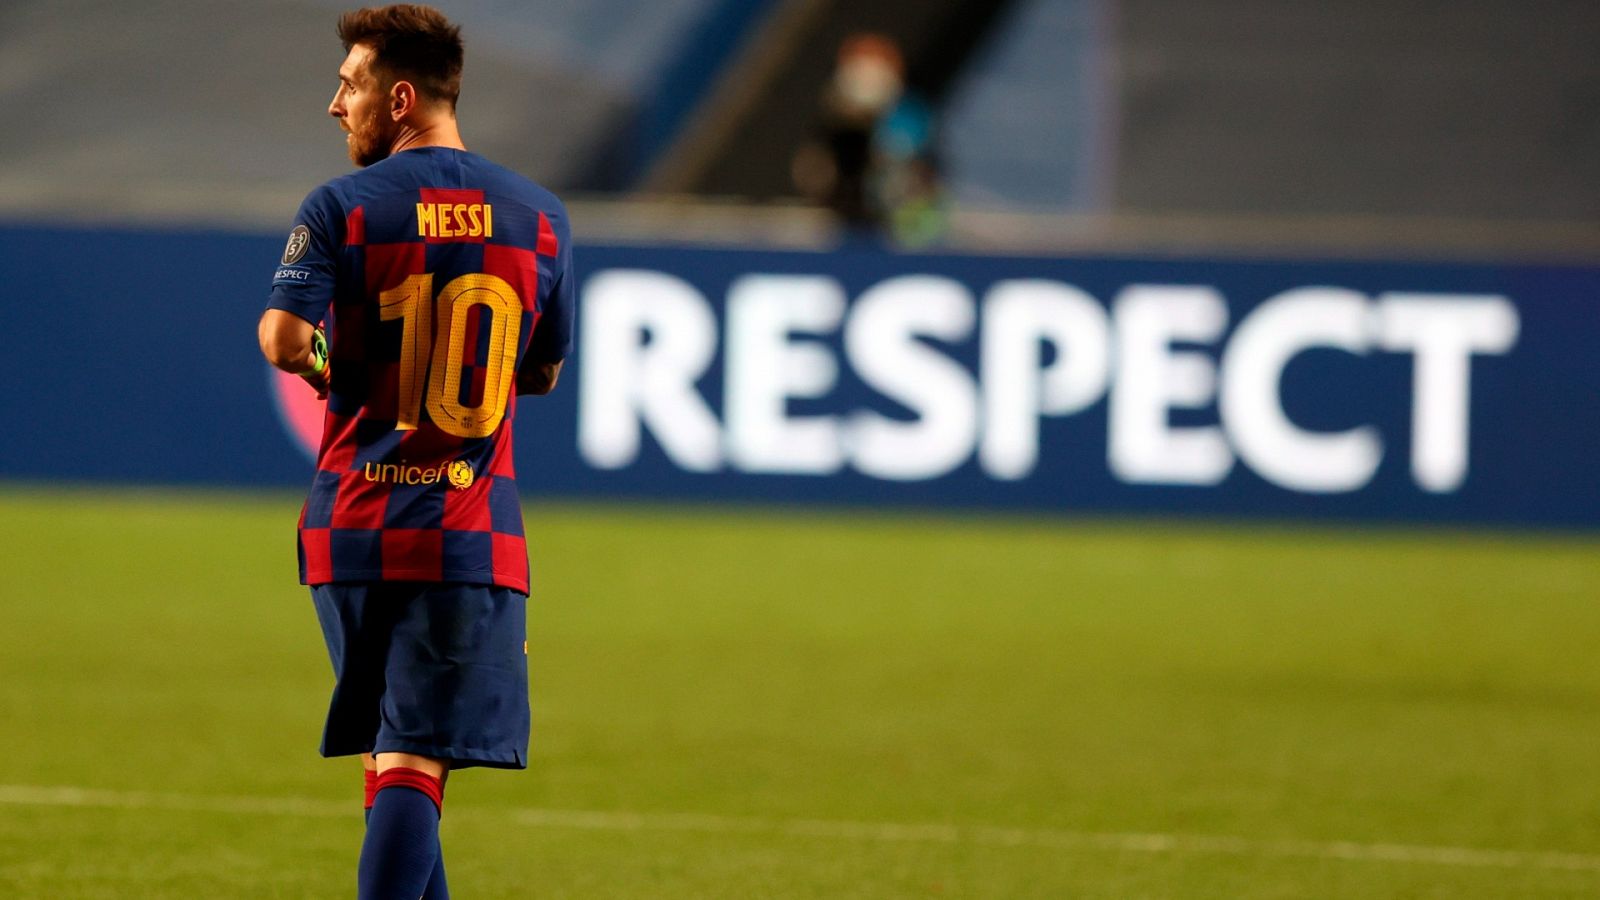 Leo Messi, un jugador que ha hecho historia con el F.C. Barcelona